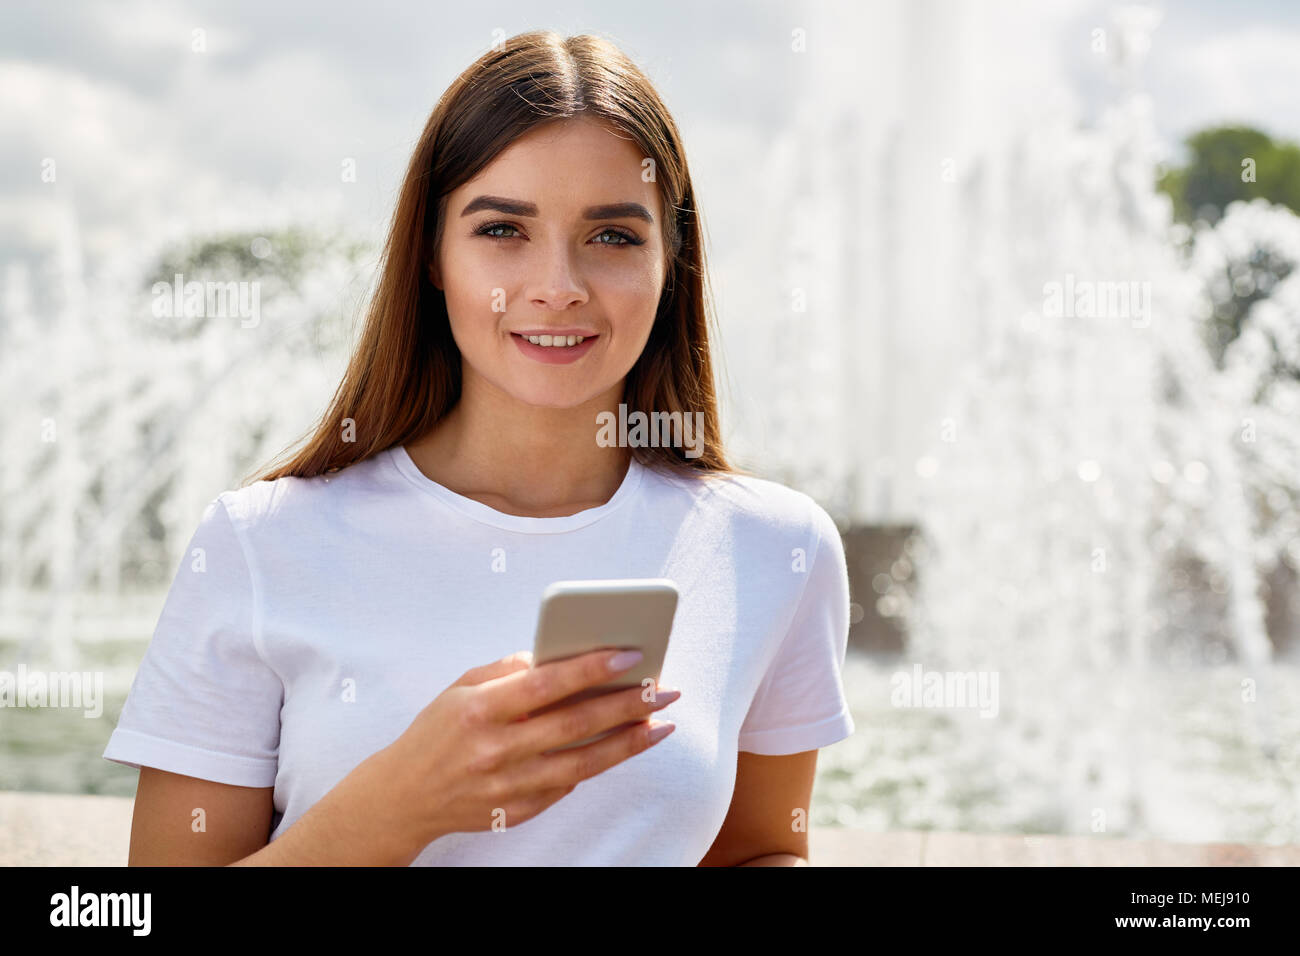 Girl with smartphone Stock Photo